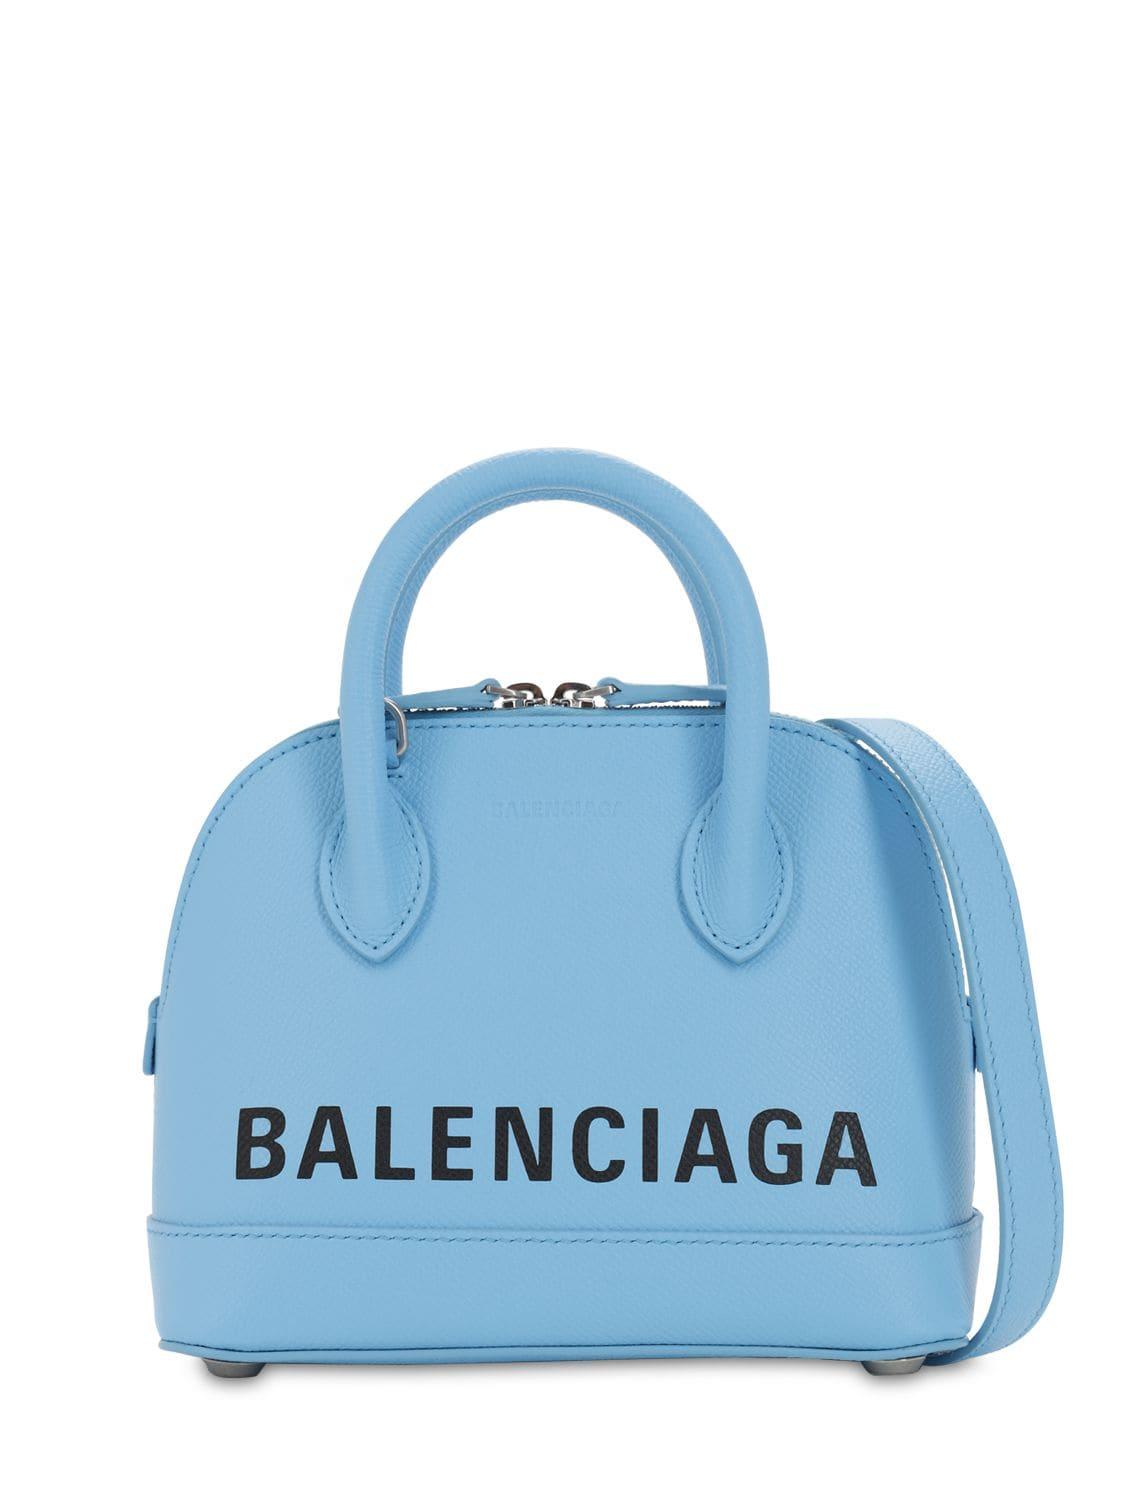 Balenciaga Xxs Ville Leather Top Handle Bag in Blue | Lyst